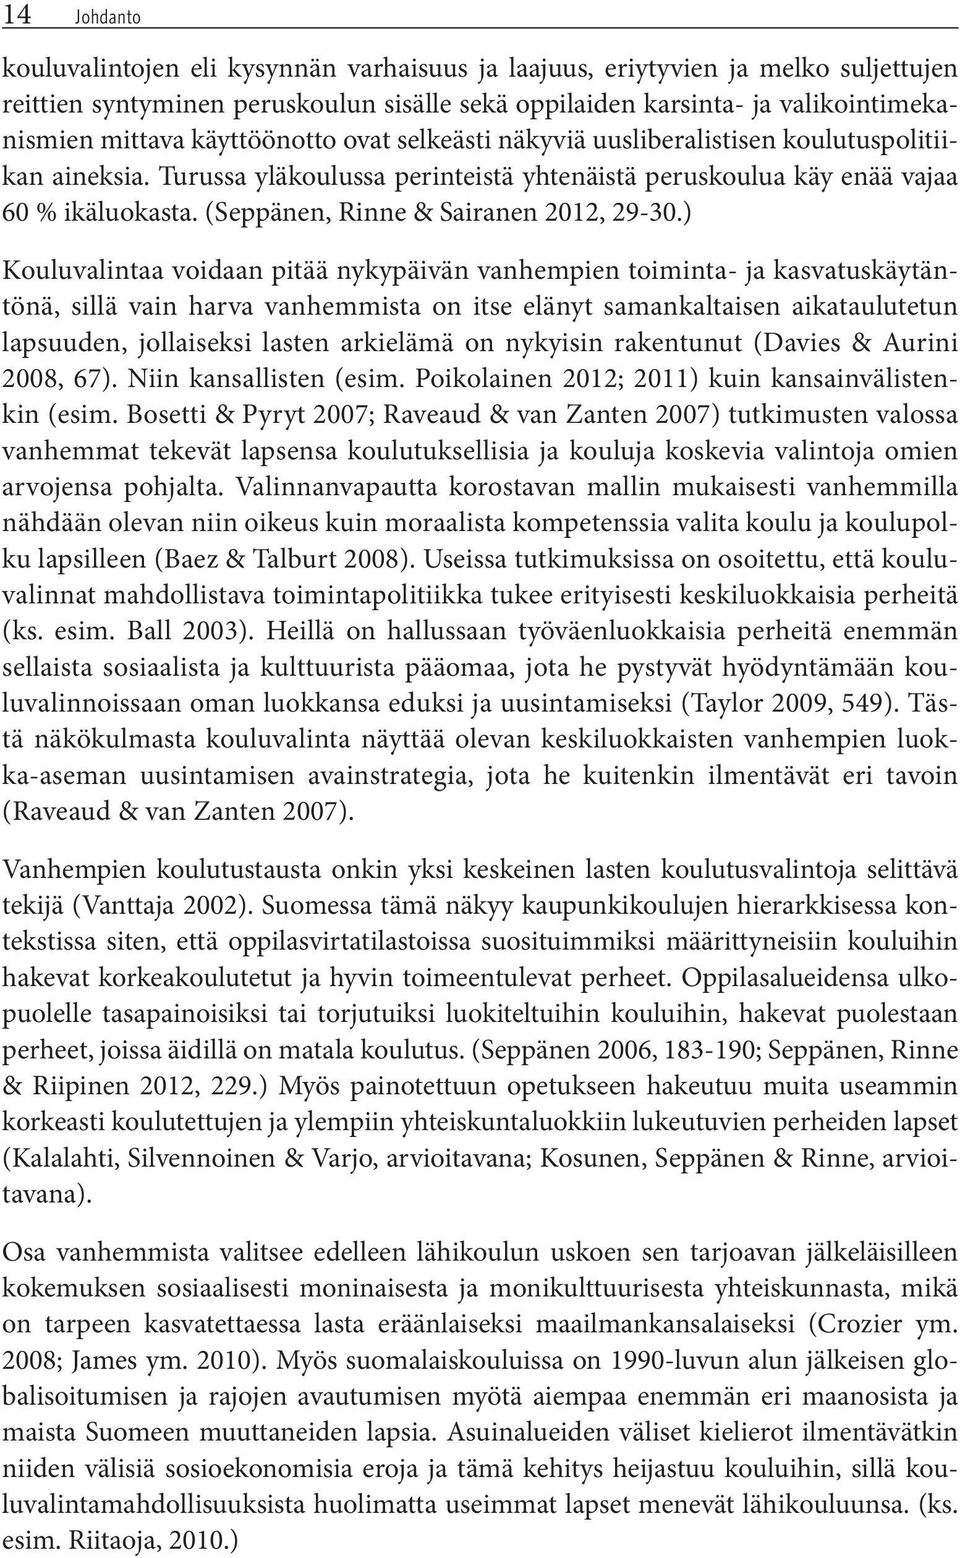 (Seppänen, Rinne & Sairanen 2012, 29-30.